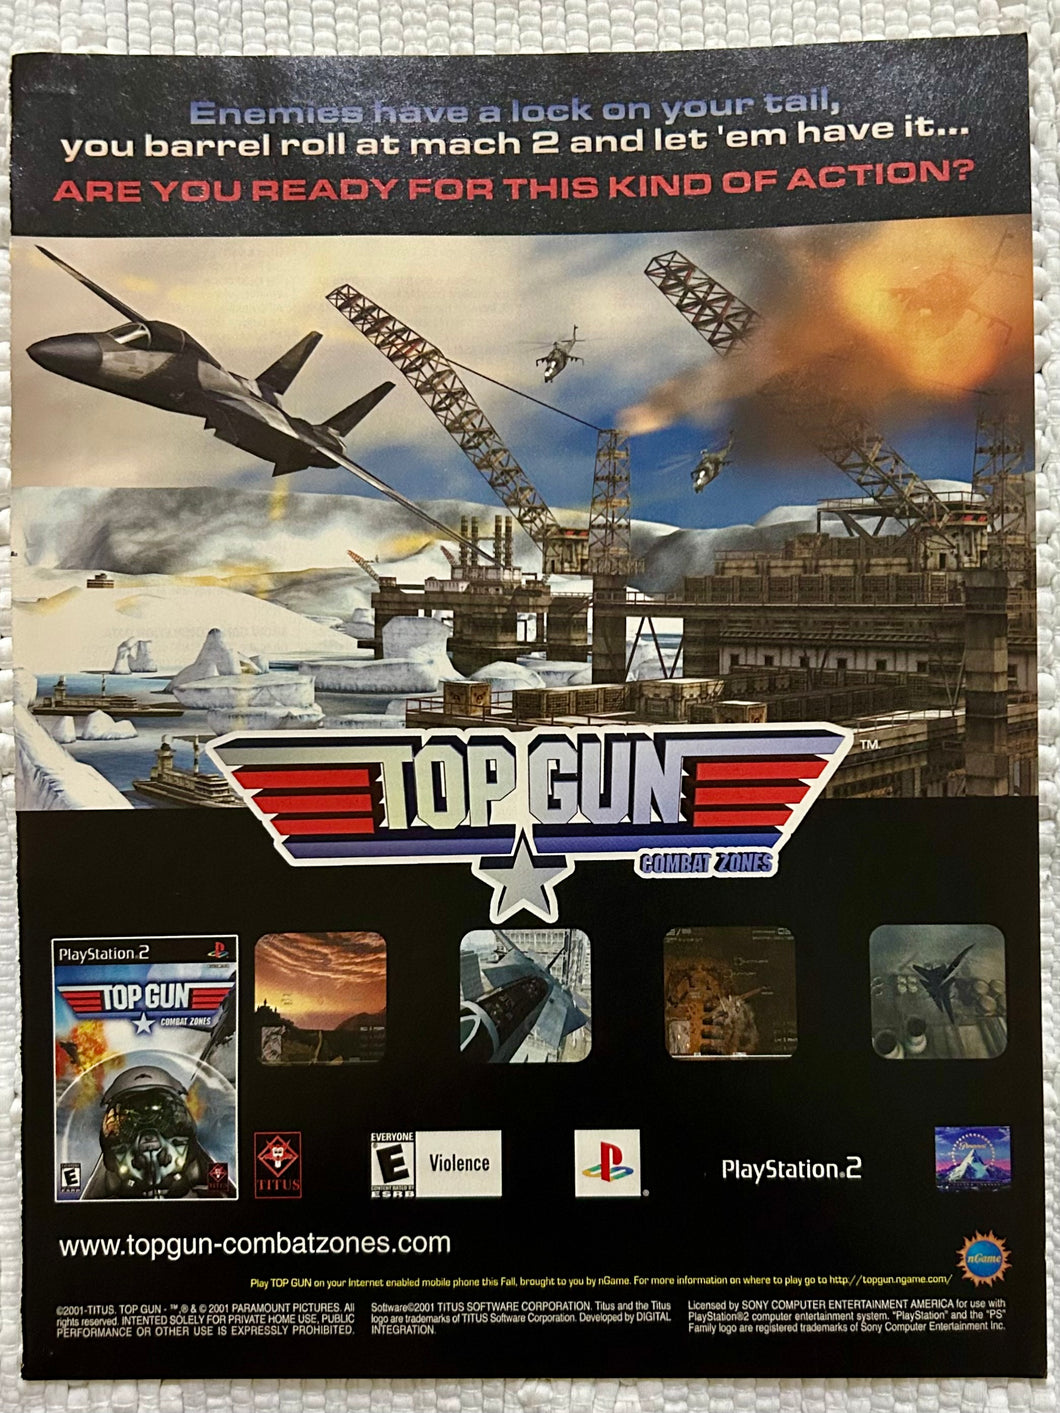 Top Gun: Combat Zones - PS2 NGC GBA - Original Vintage Advertisement - Print Ads - Laminated A4 Poster